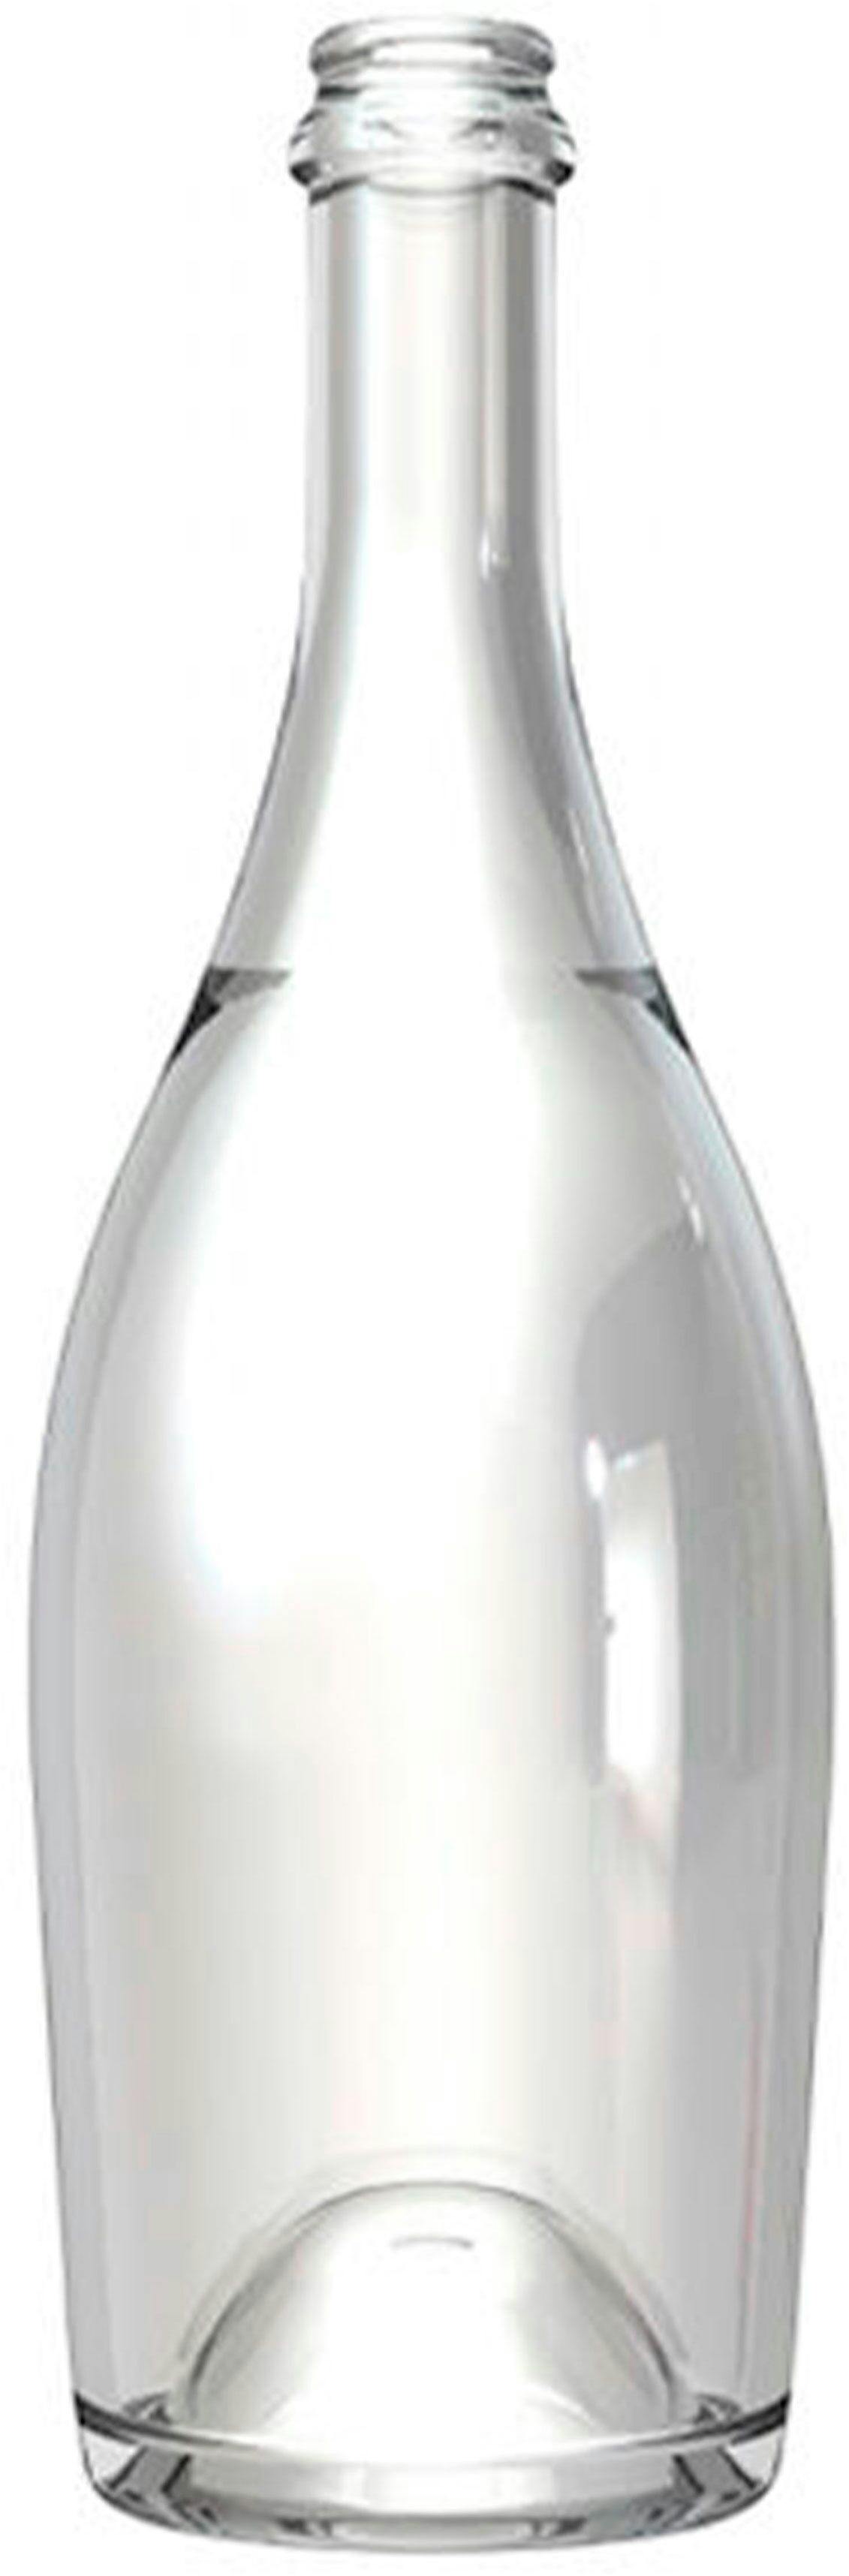 Garrafa CHAMP  COLLIO 750 ml Corona 29 ExtraBaja - 18mm